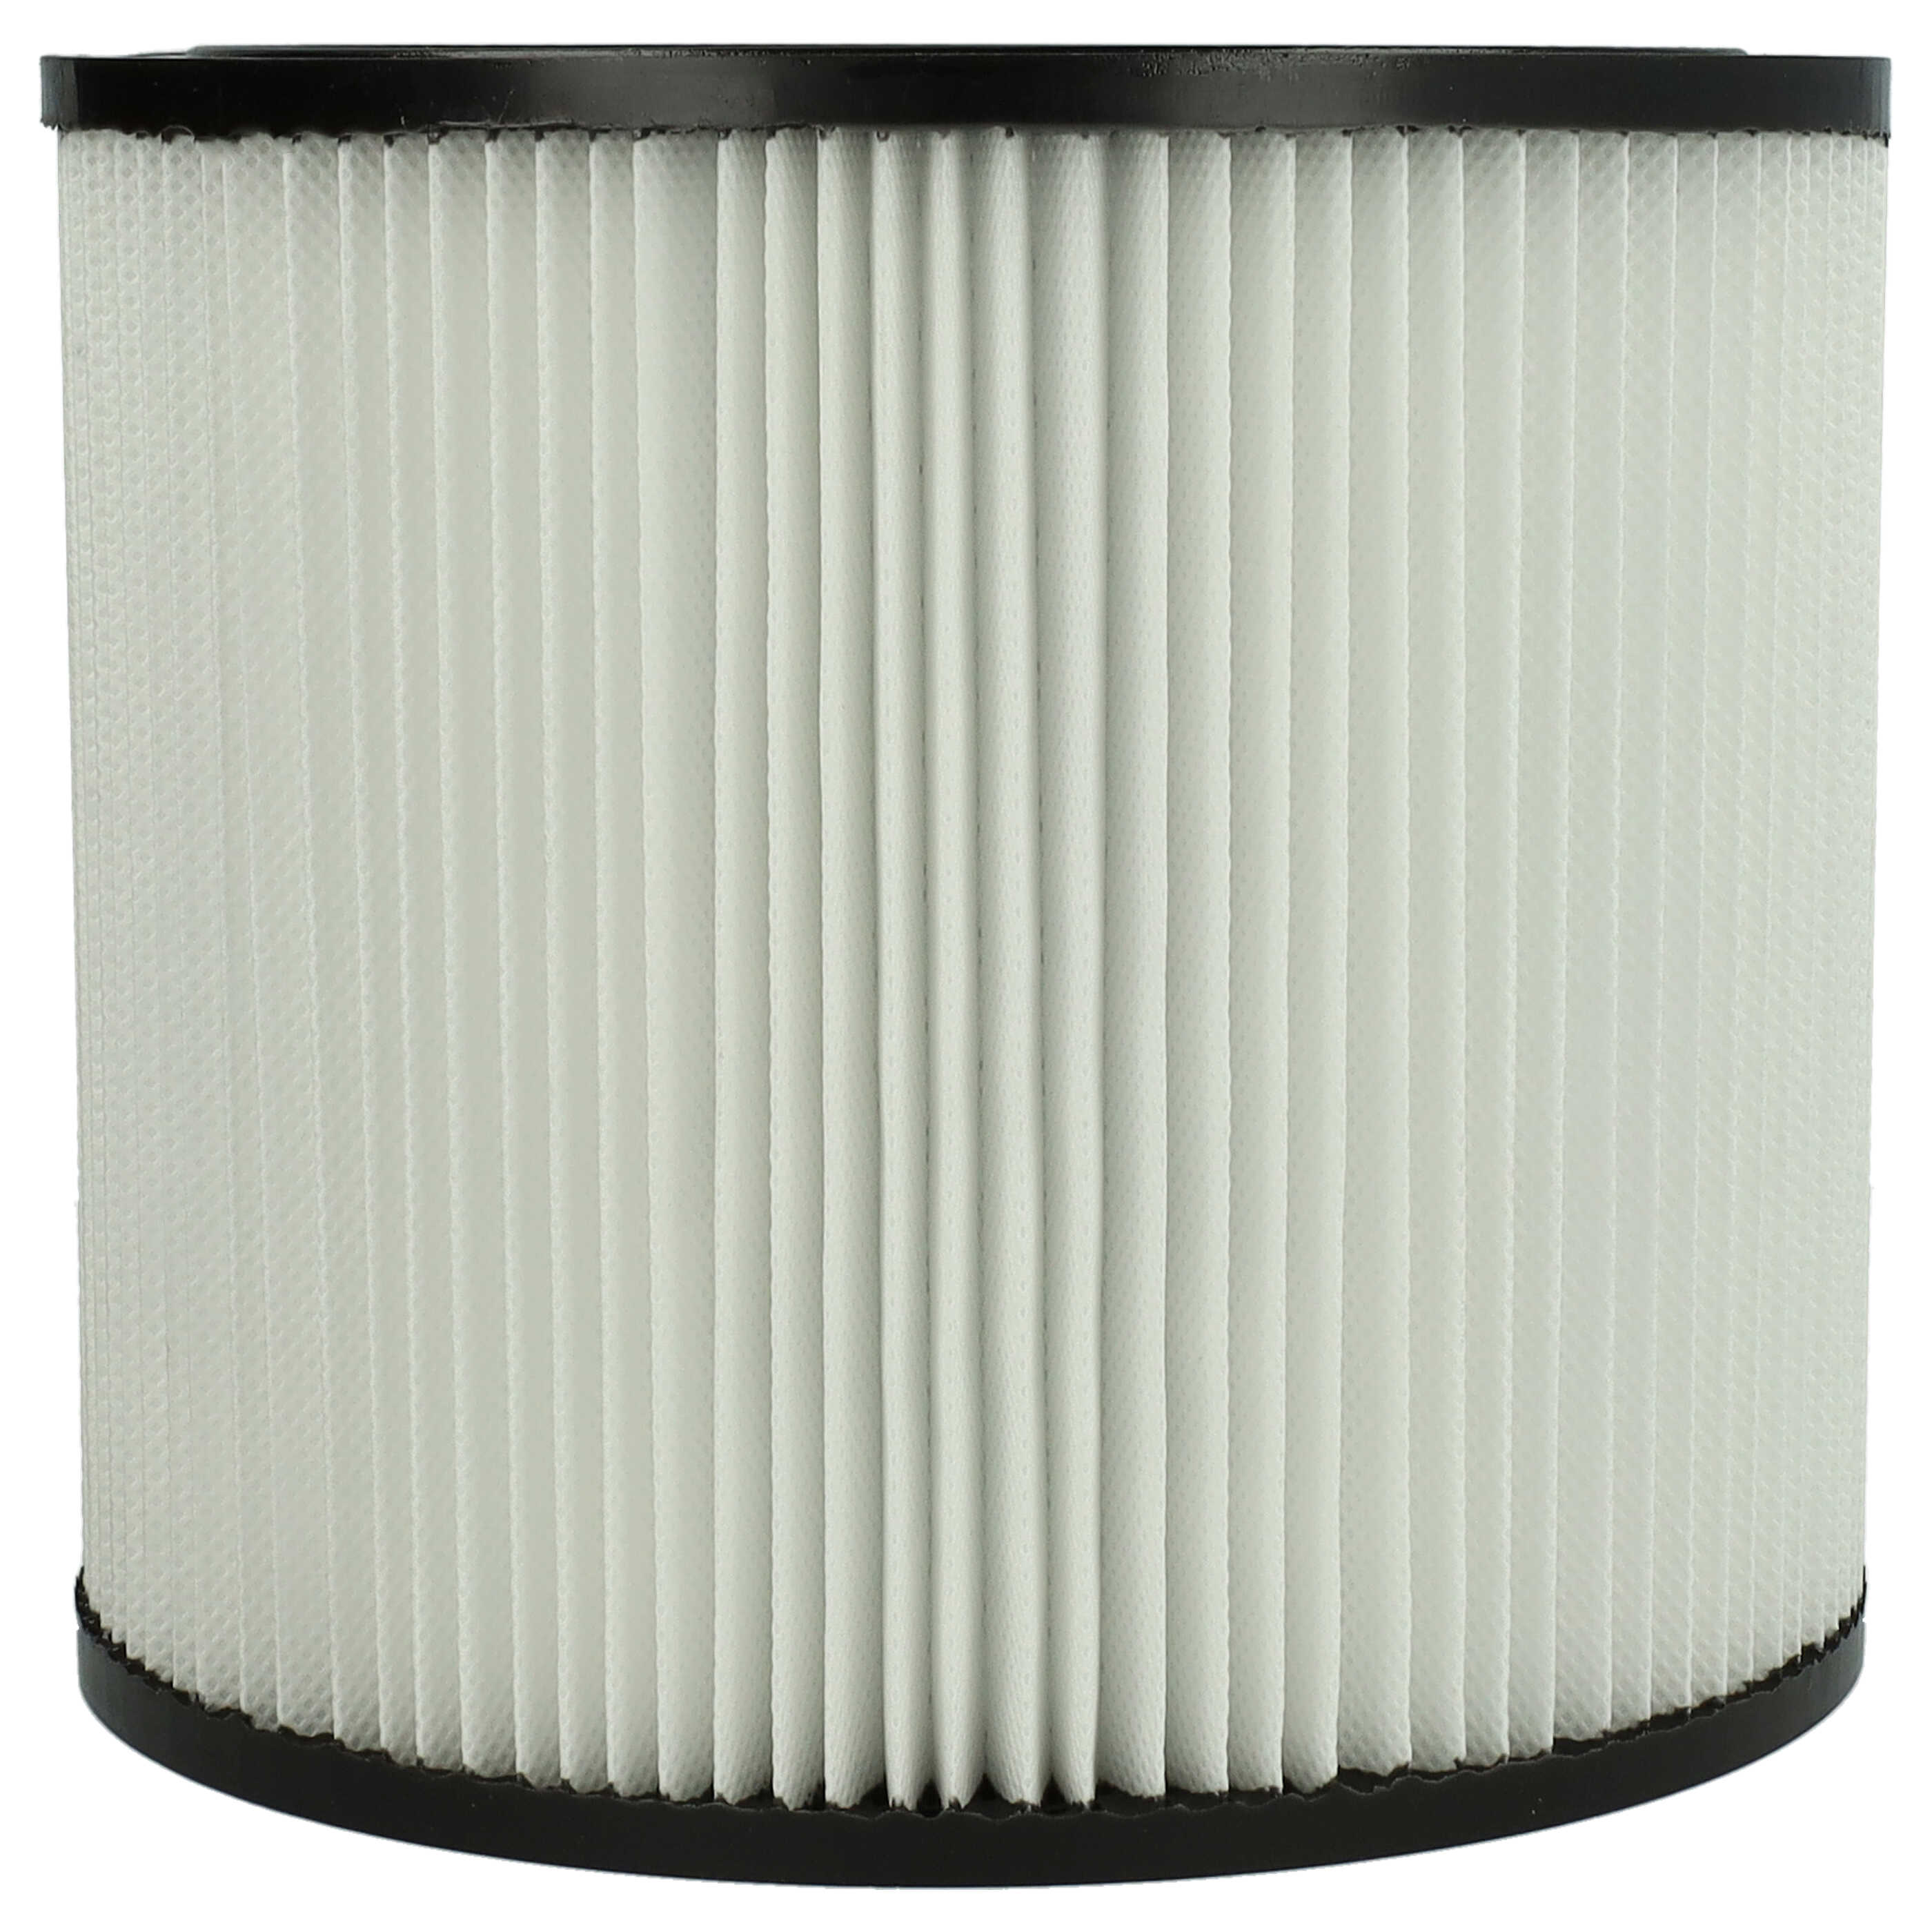 1x Filter replaces ShopVac 90304, 126282903041, 903-04, 026282290038 for ShopVac Vacuum Cleaner, black / white